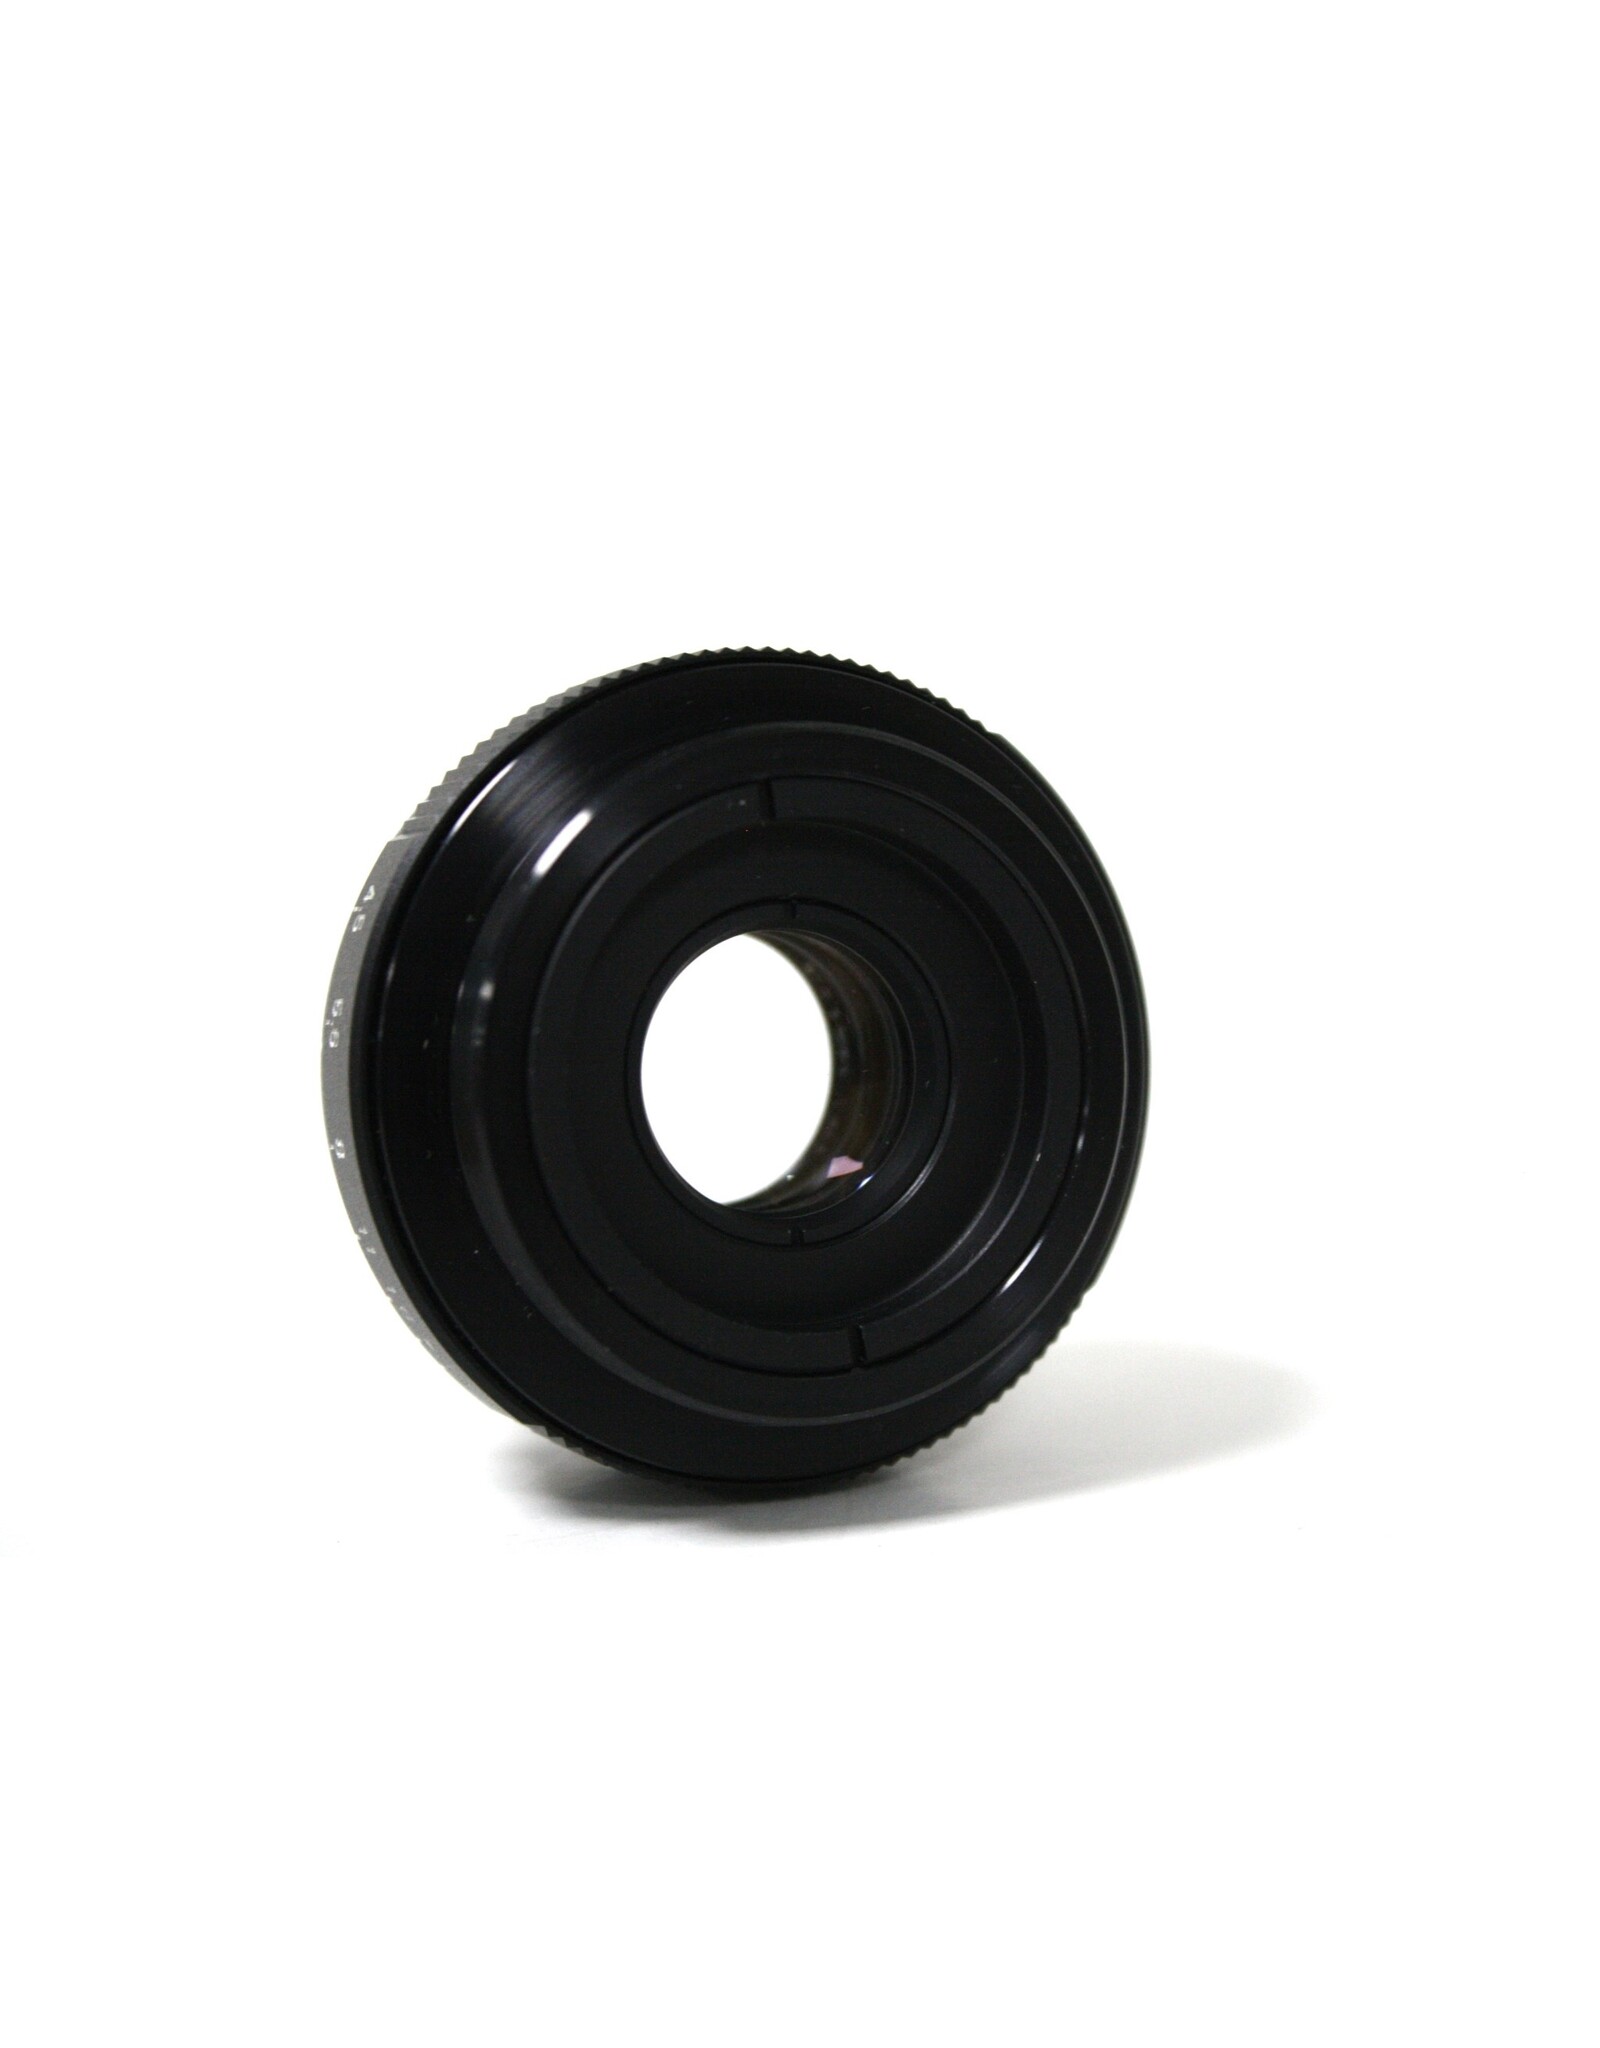 Tominon 75mm f4.5 Enlarging Lens  MINT (Pre-owned)